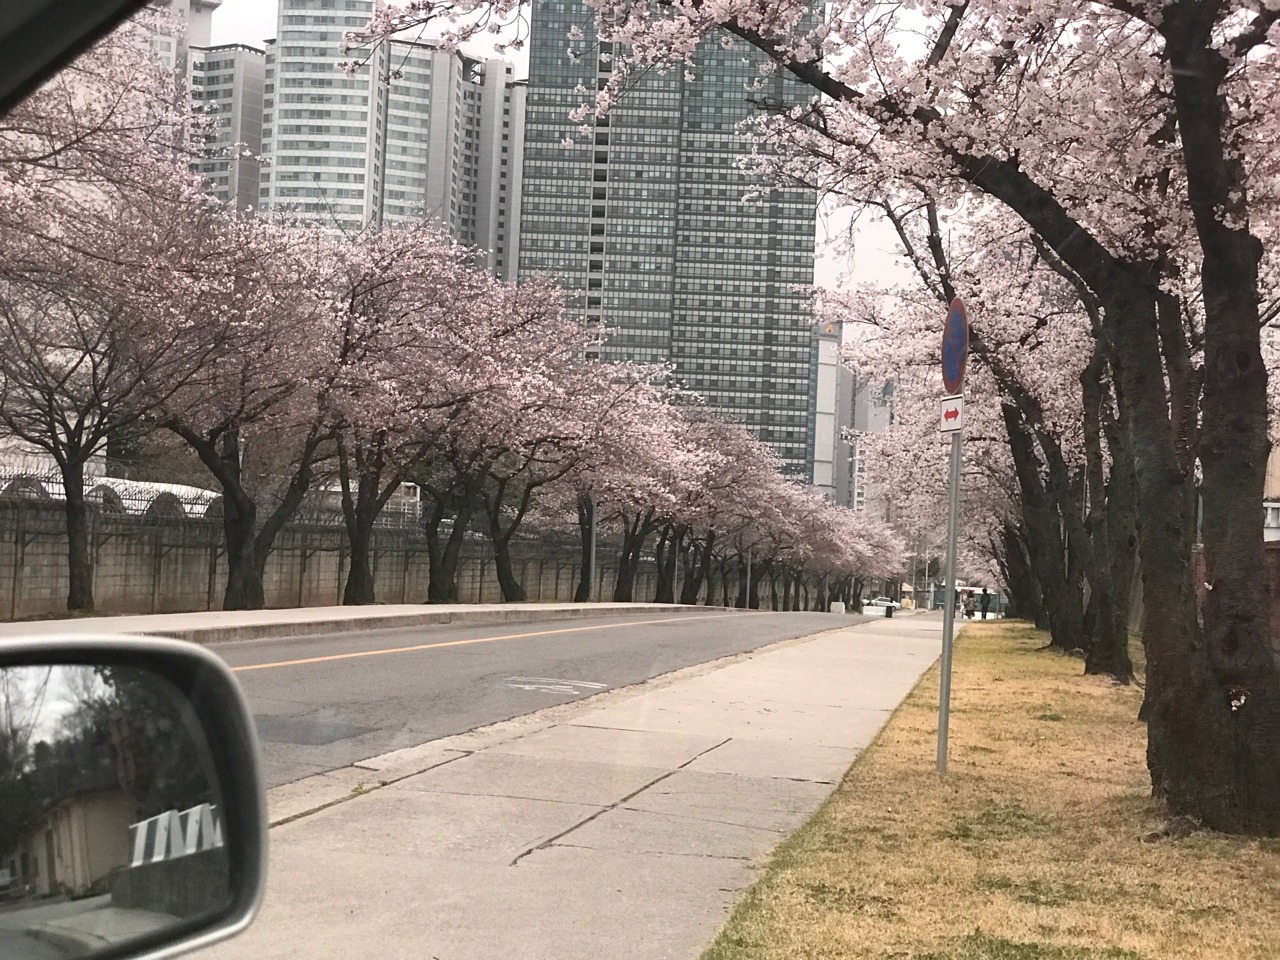 Cherry blossoms in Yongsan